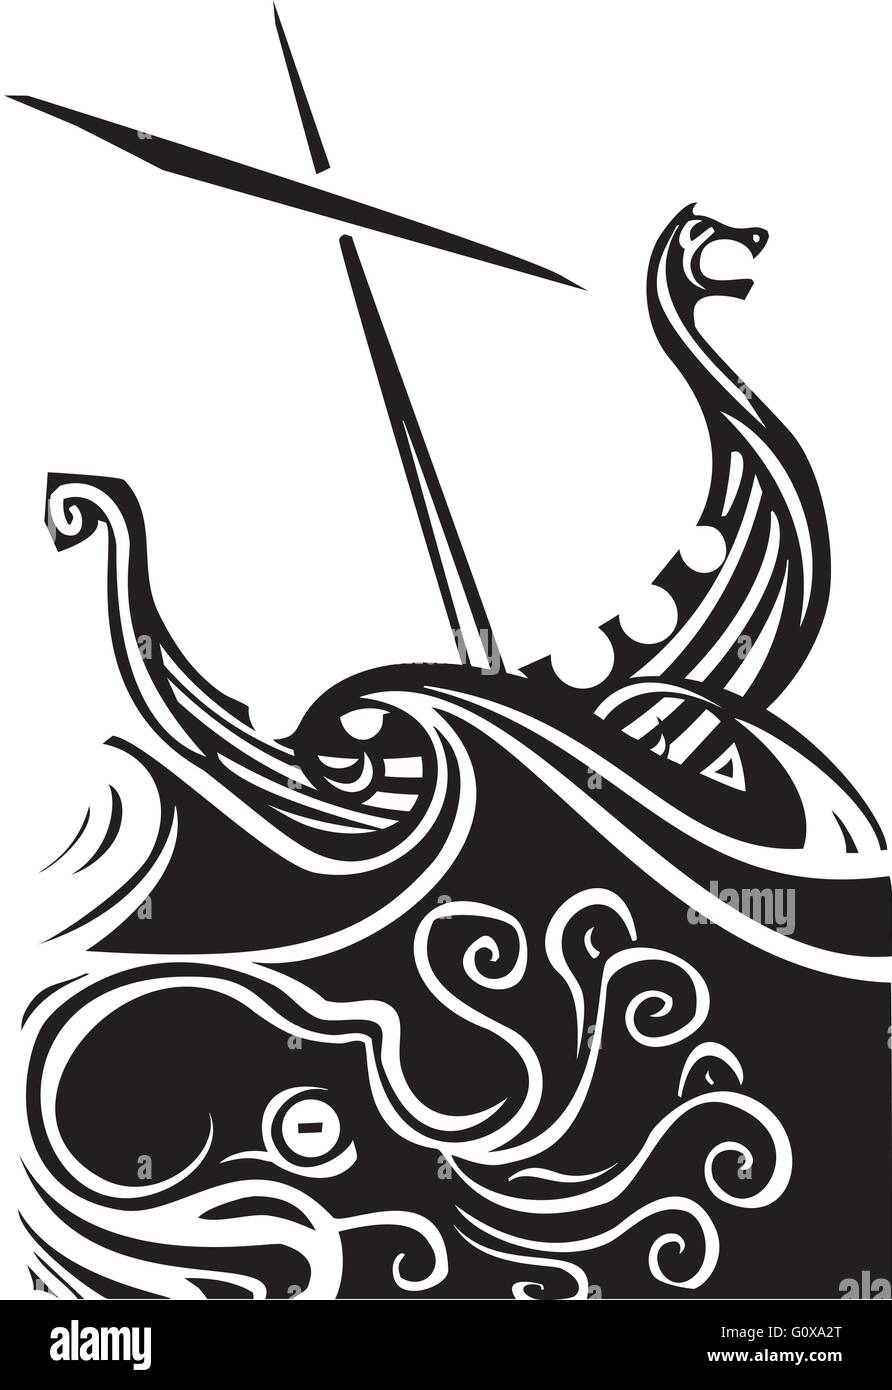 Woodcut style image of a viking longship sailing into the waves Stock ...